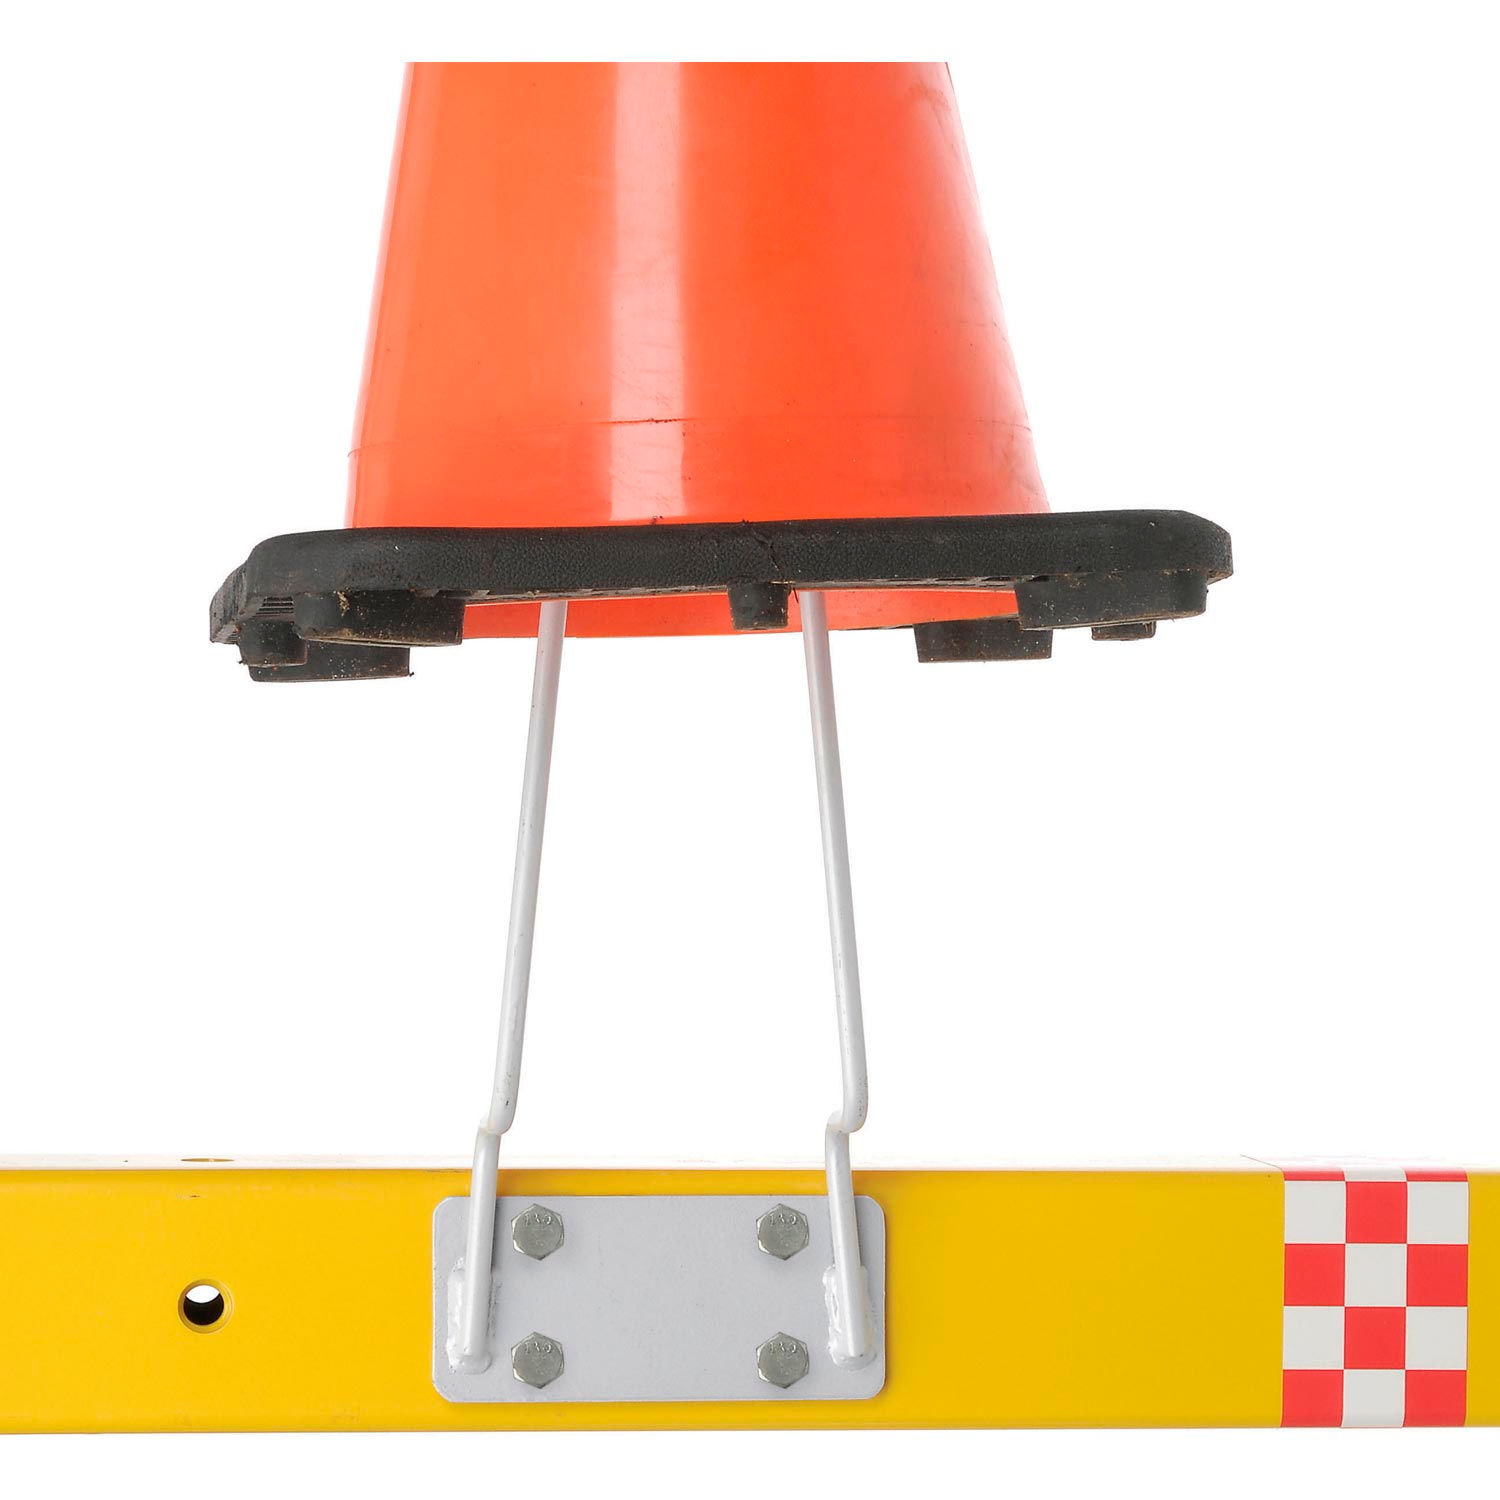 traffic cone holders for trucks